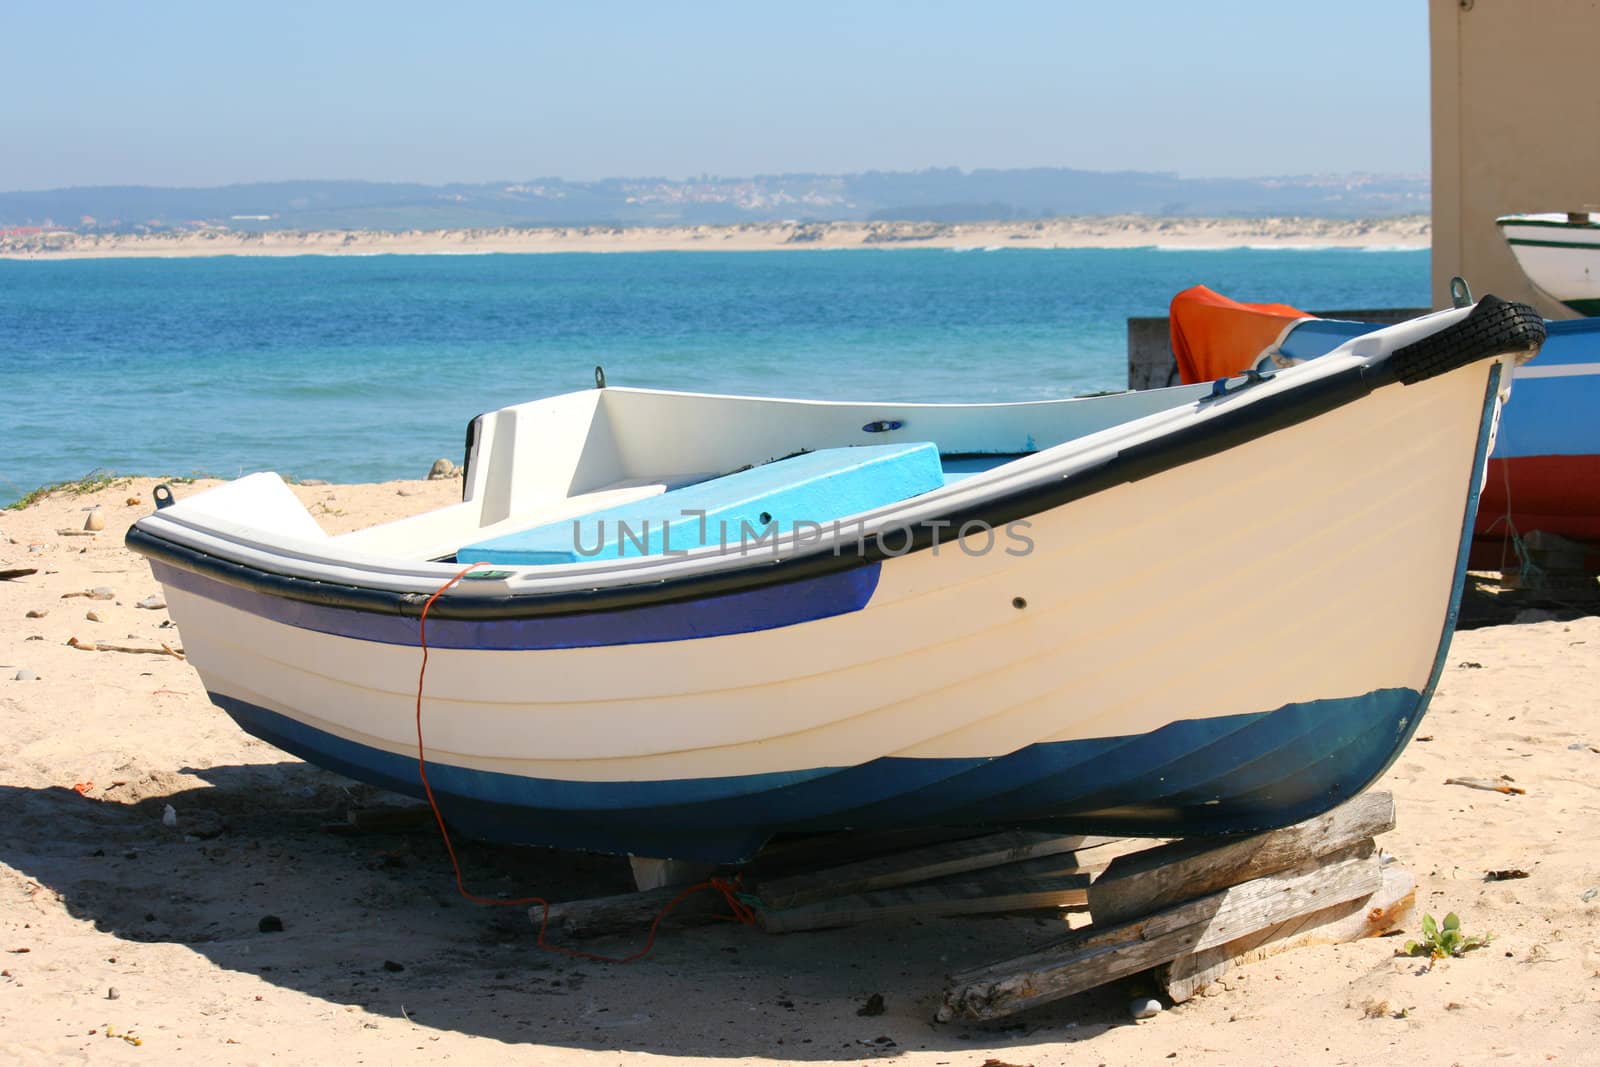 boat on beach